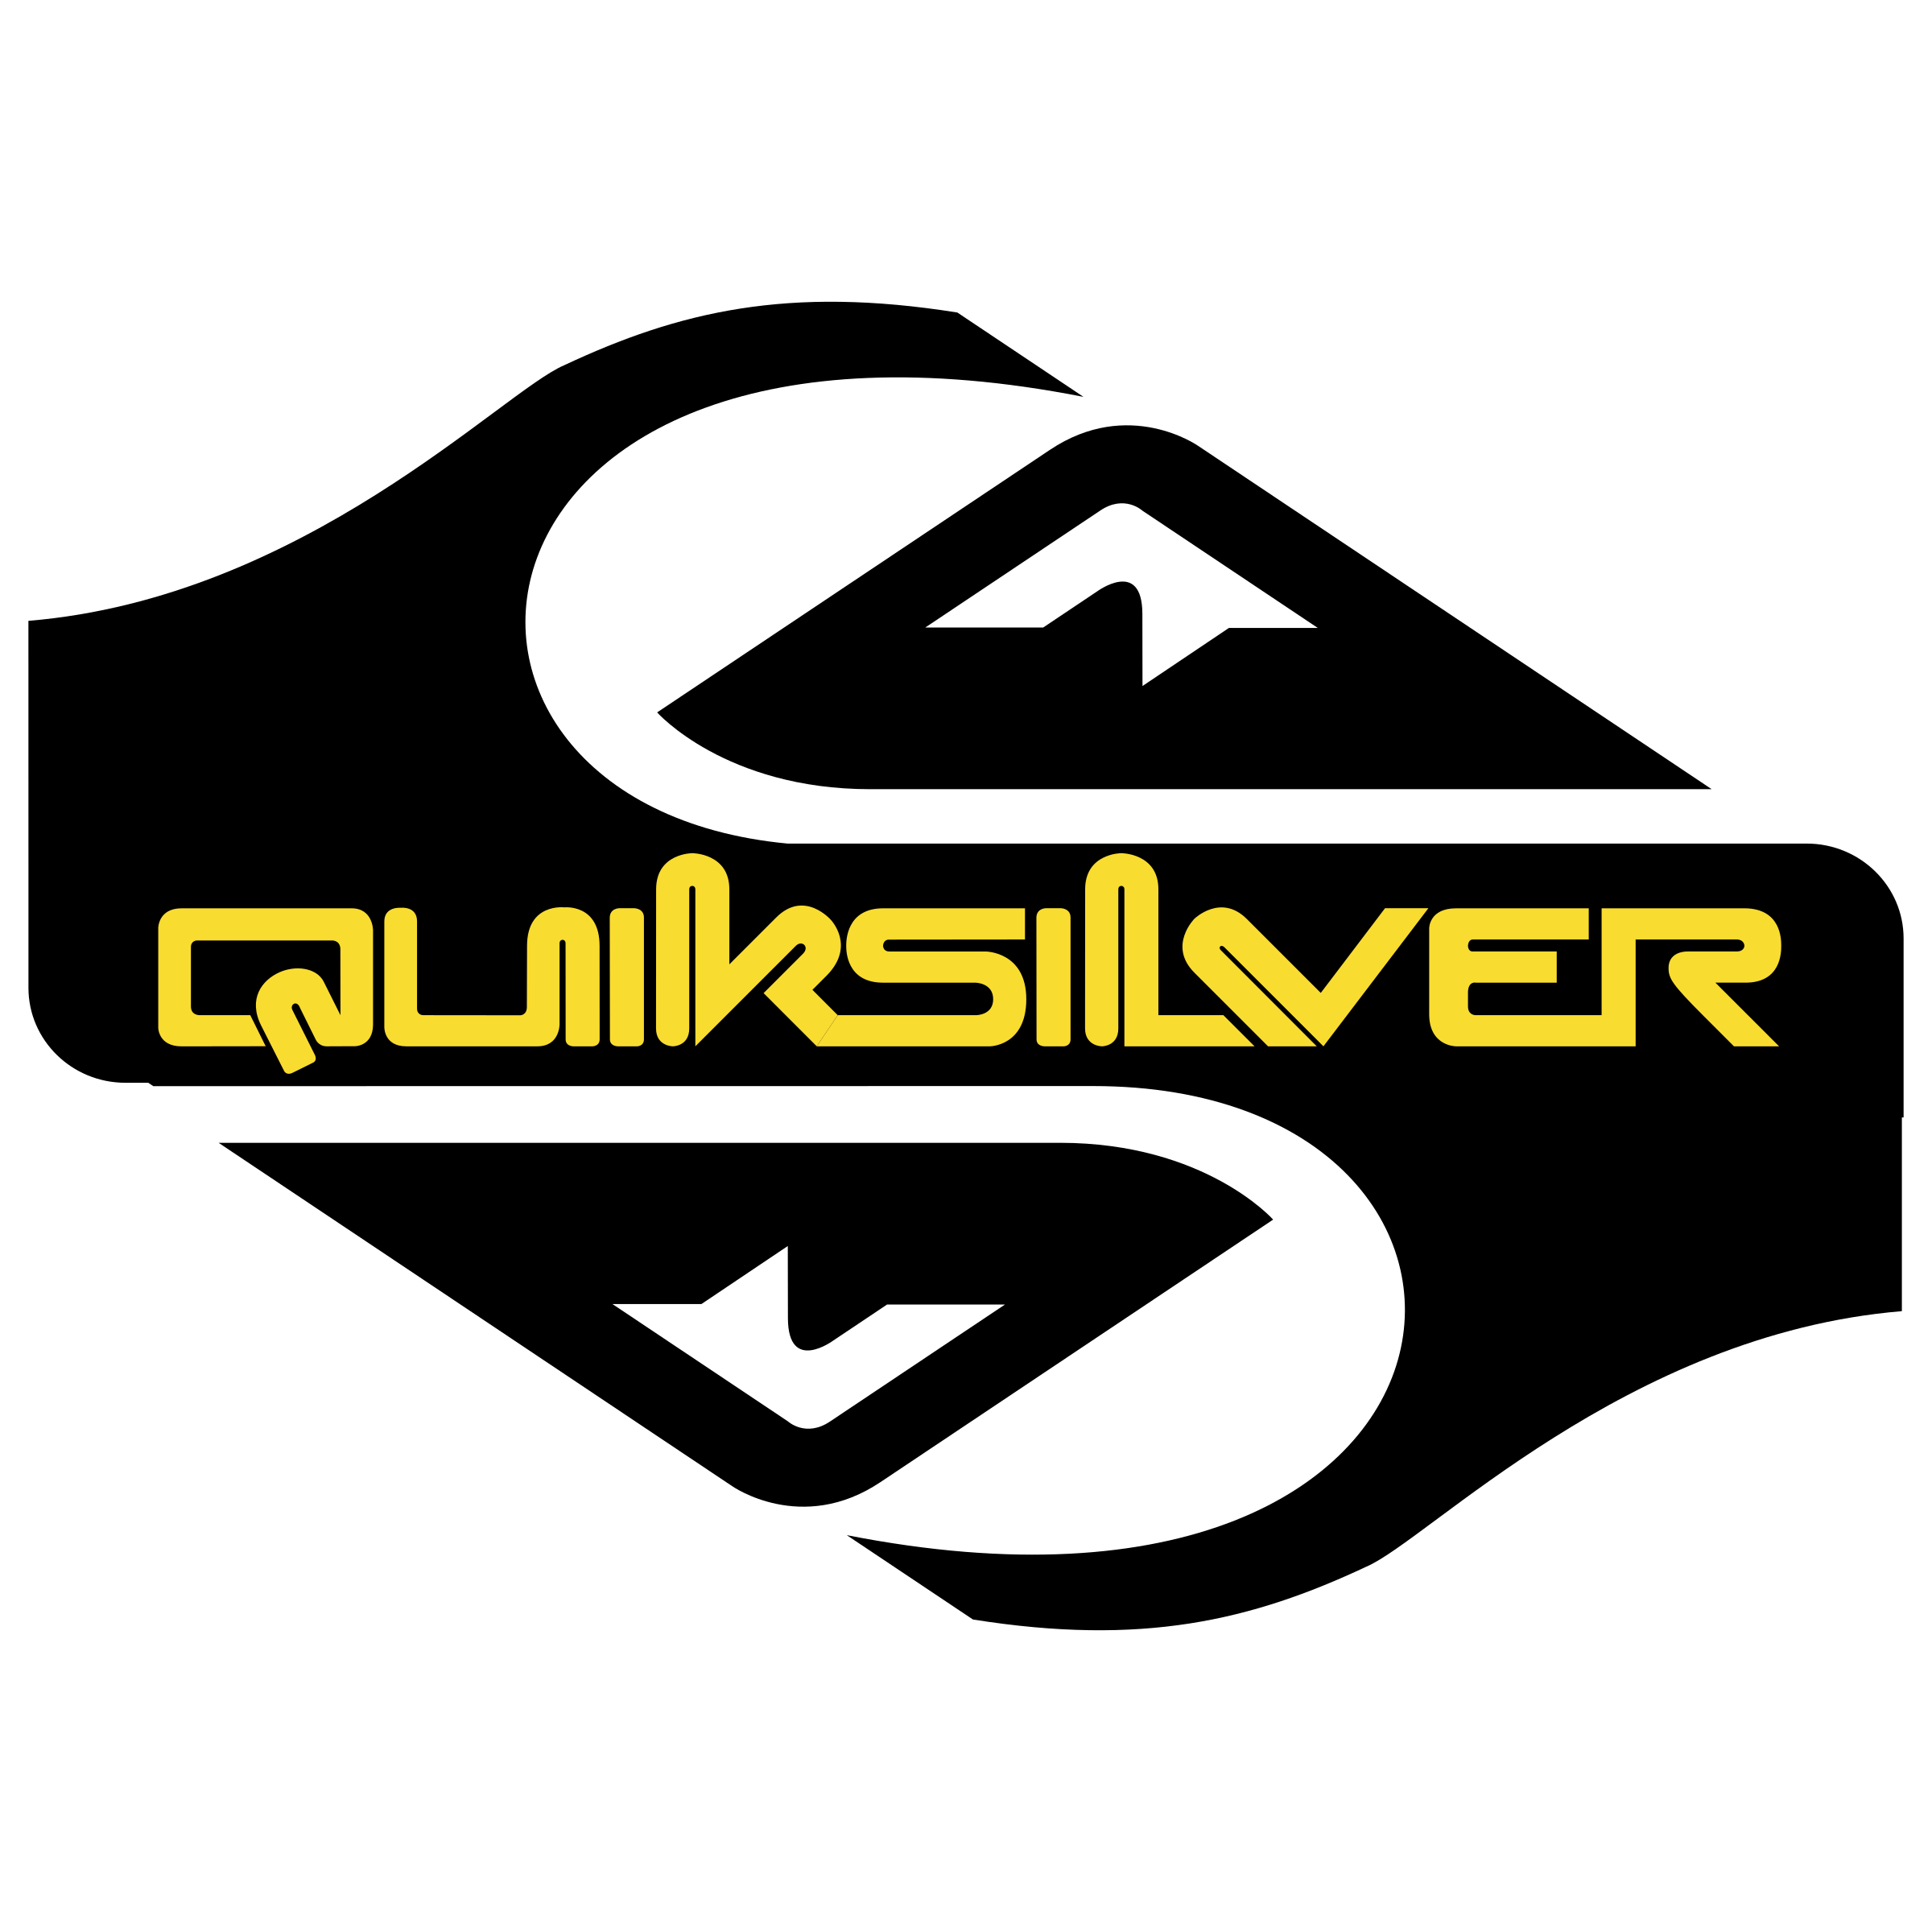 The Quiksilver Logo - Quiksilver Logo PNG Transparent & SVG Vector - Freebie Supply